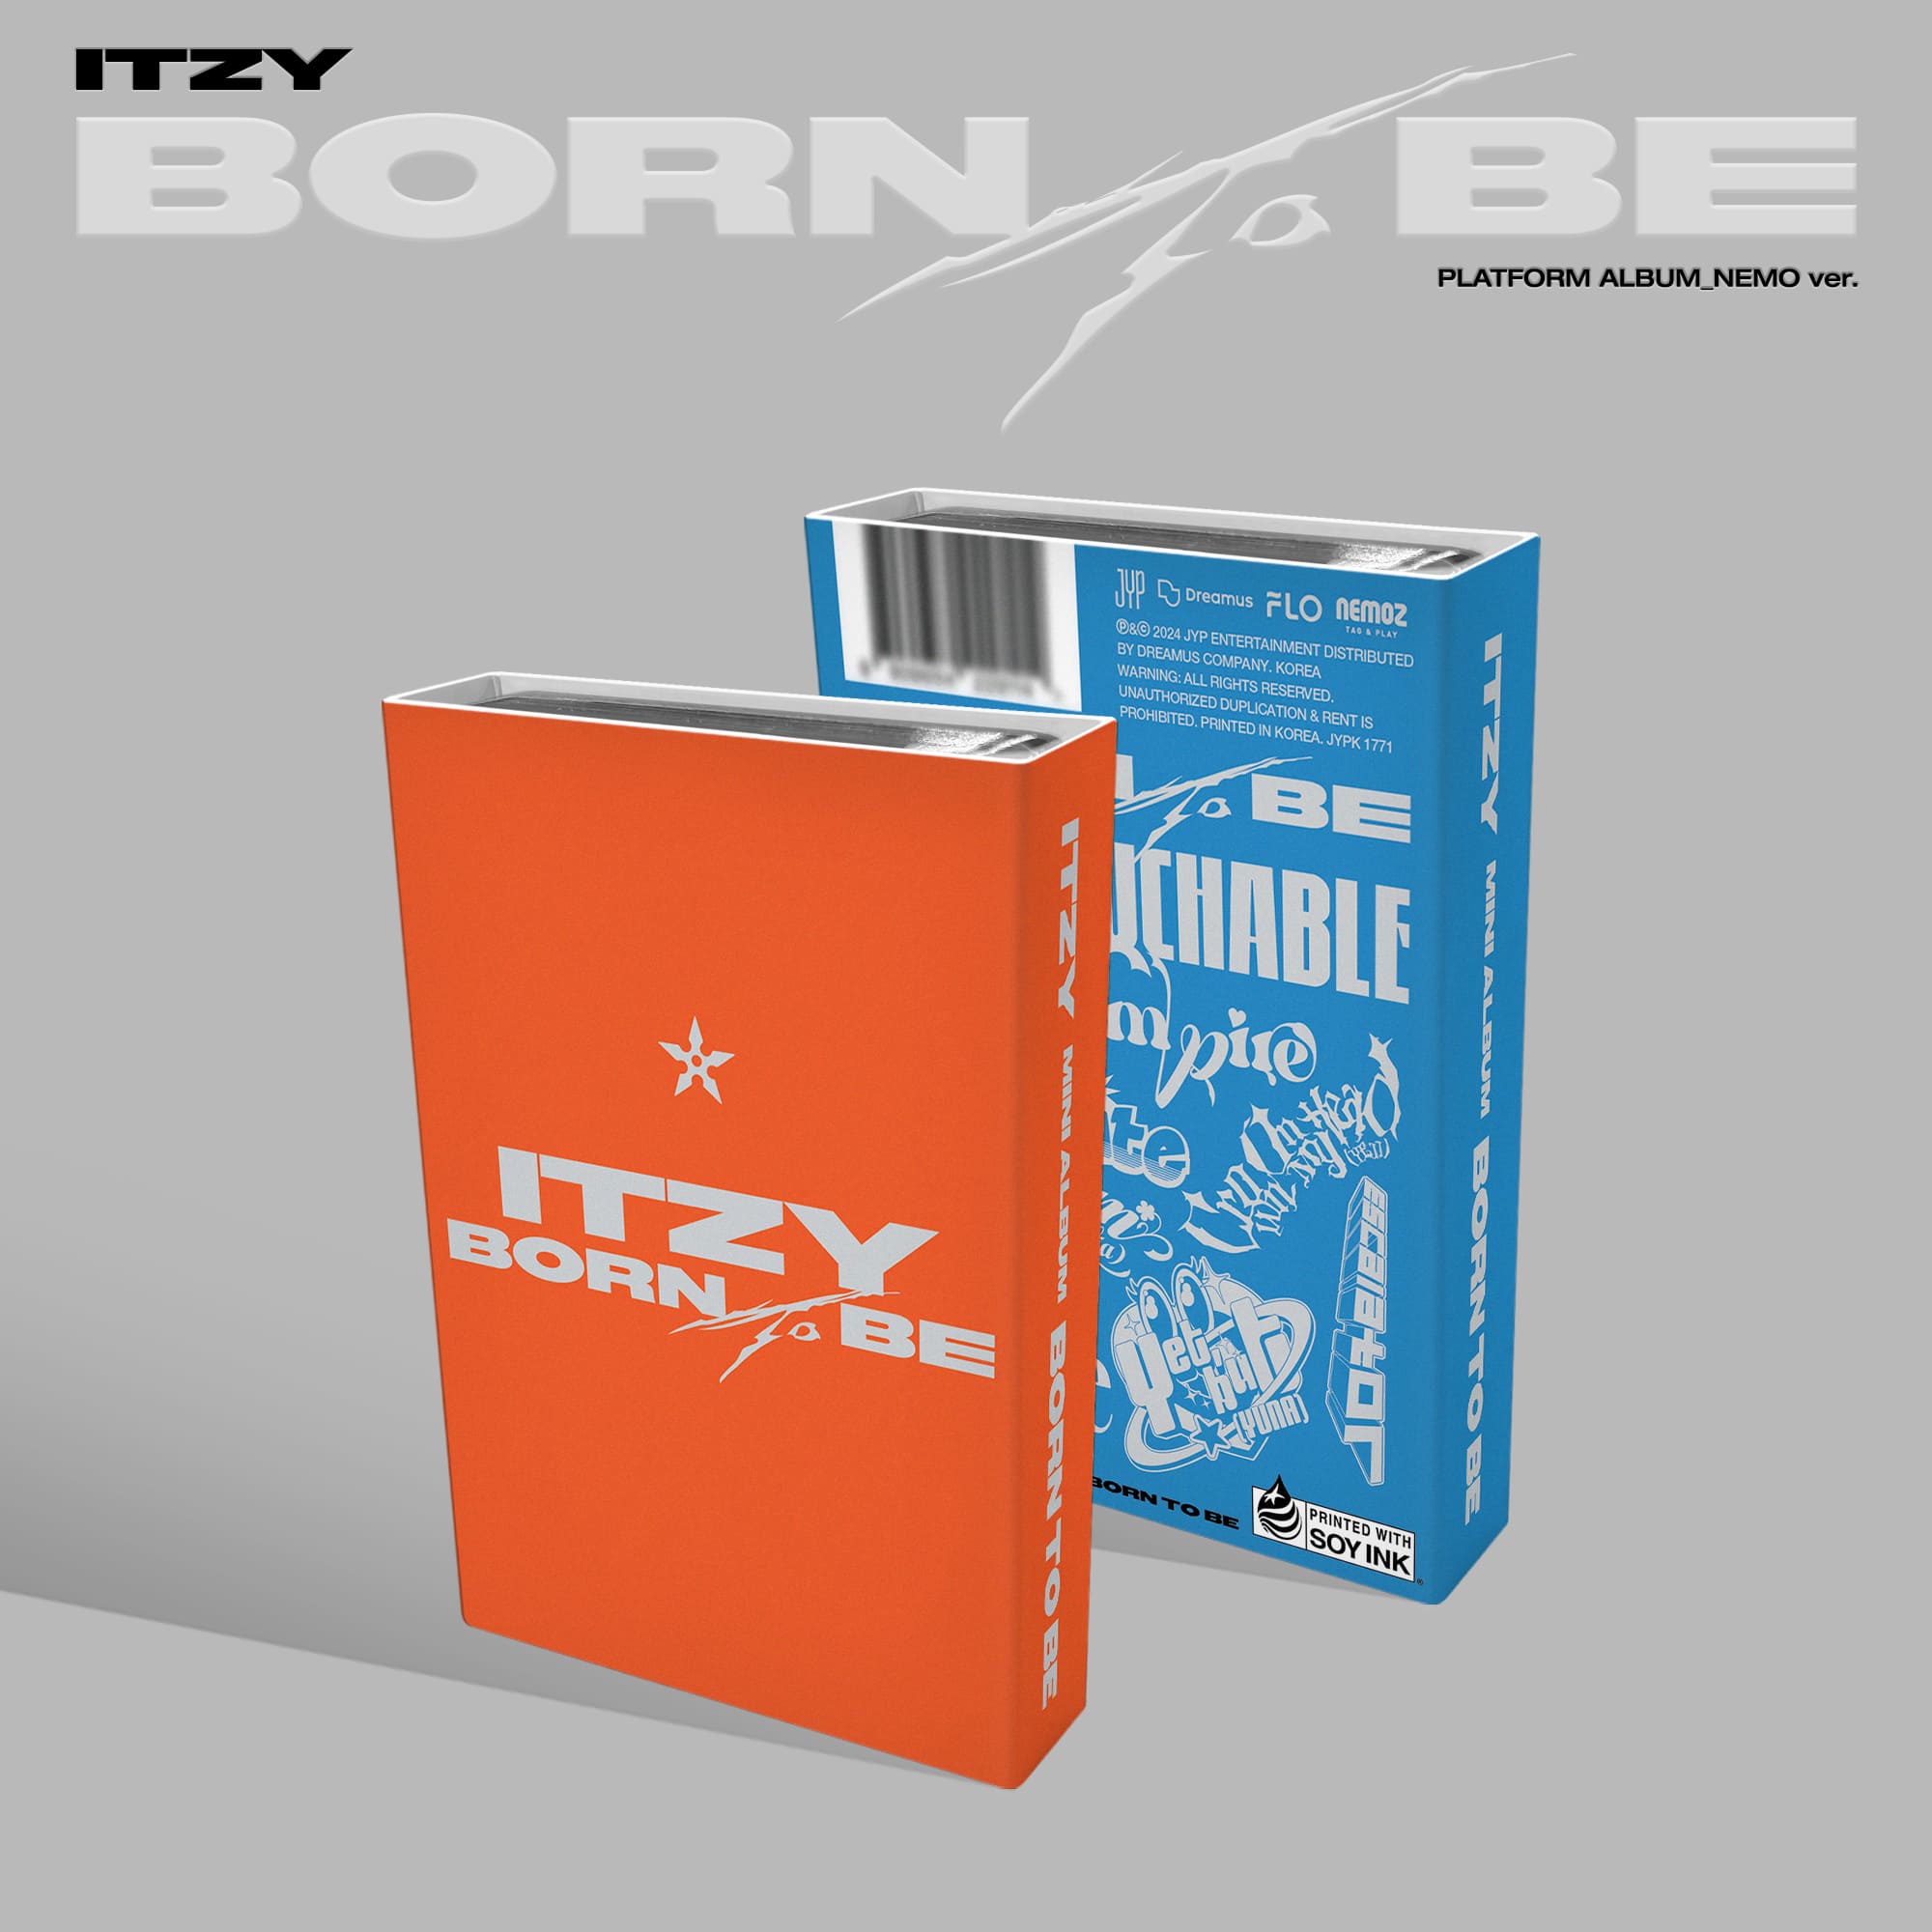 ITZY – BORN TO BE (2nd Full Album) [Platform Album Nemo Ver